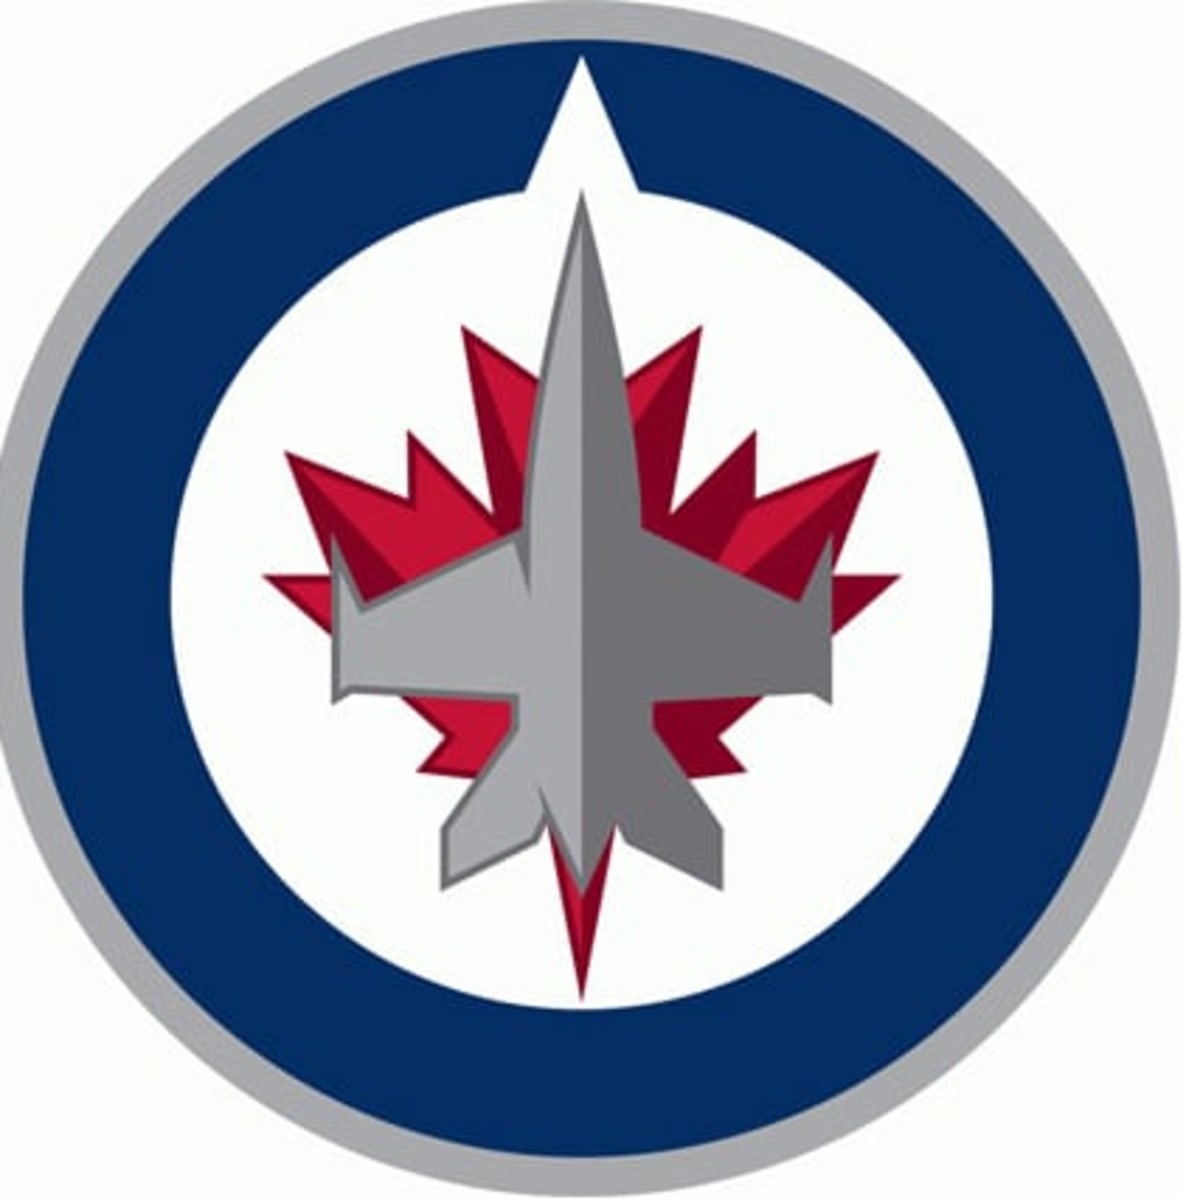 Toronto Maple Leafs Alternate Uniform - National Hockey League (NHL) -  Chris Creamer's Sports Logos Page 